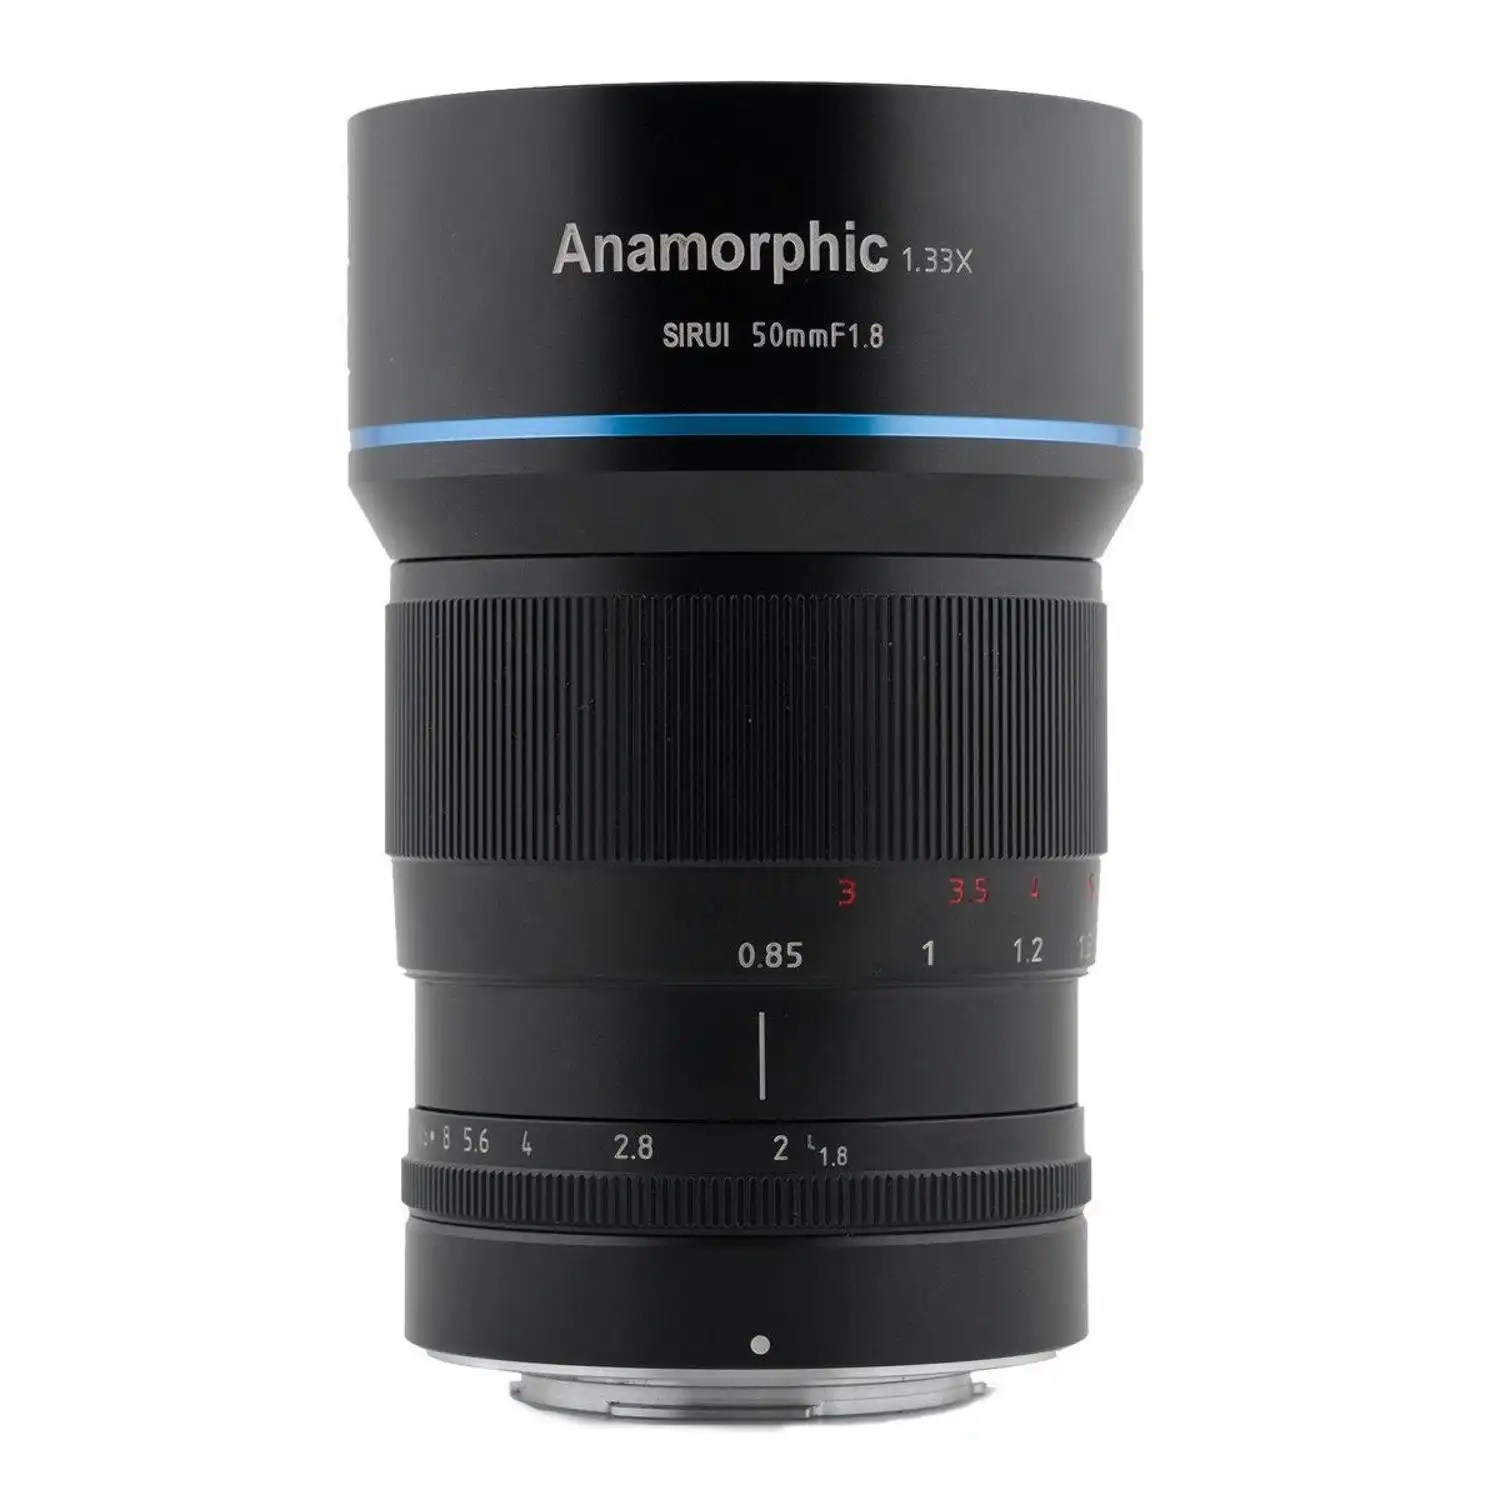 Sirui 50mm f/1.8 1.33x Anamorphic Camera Lens